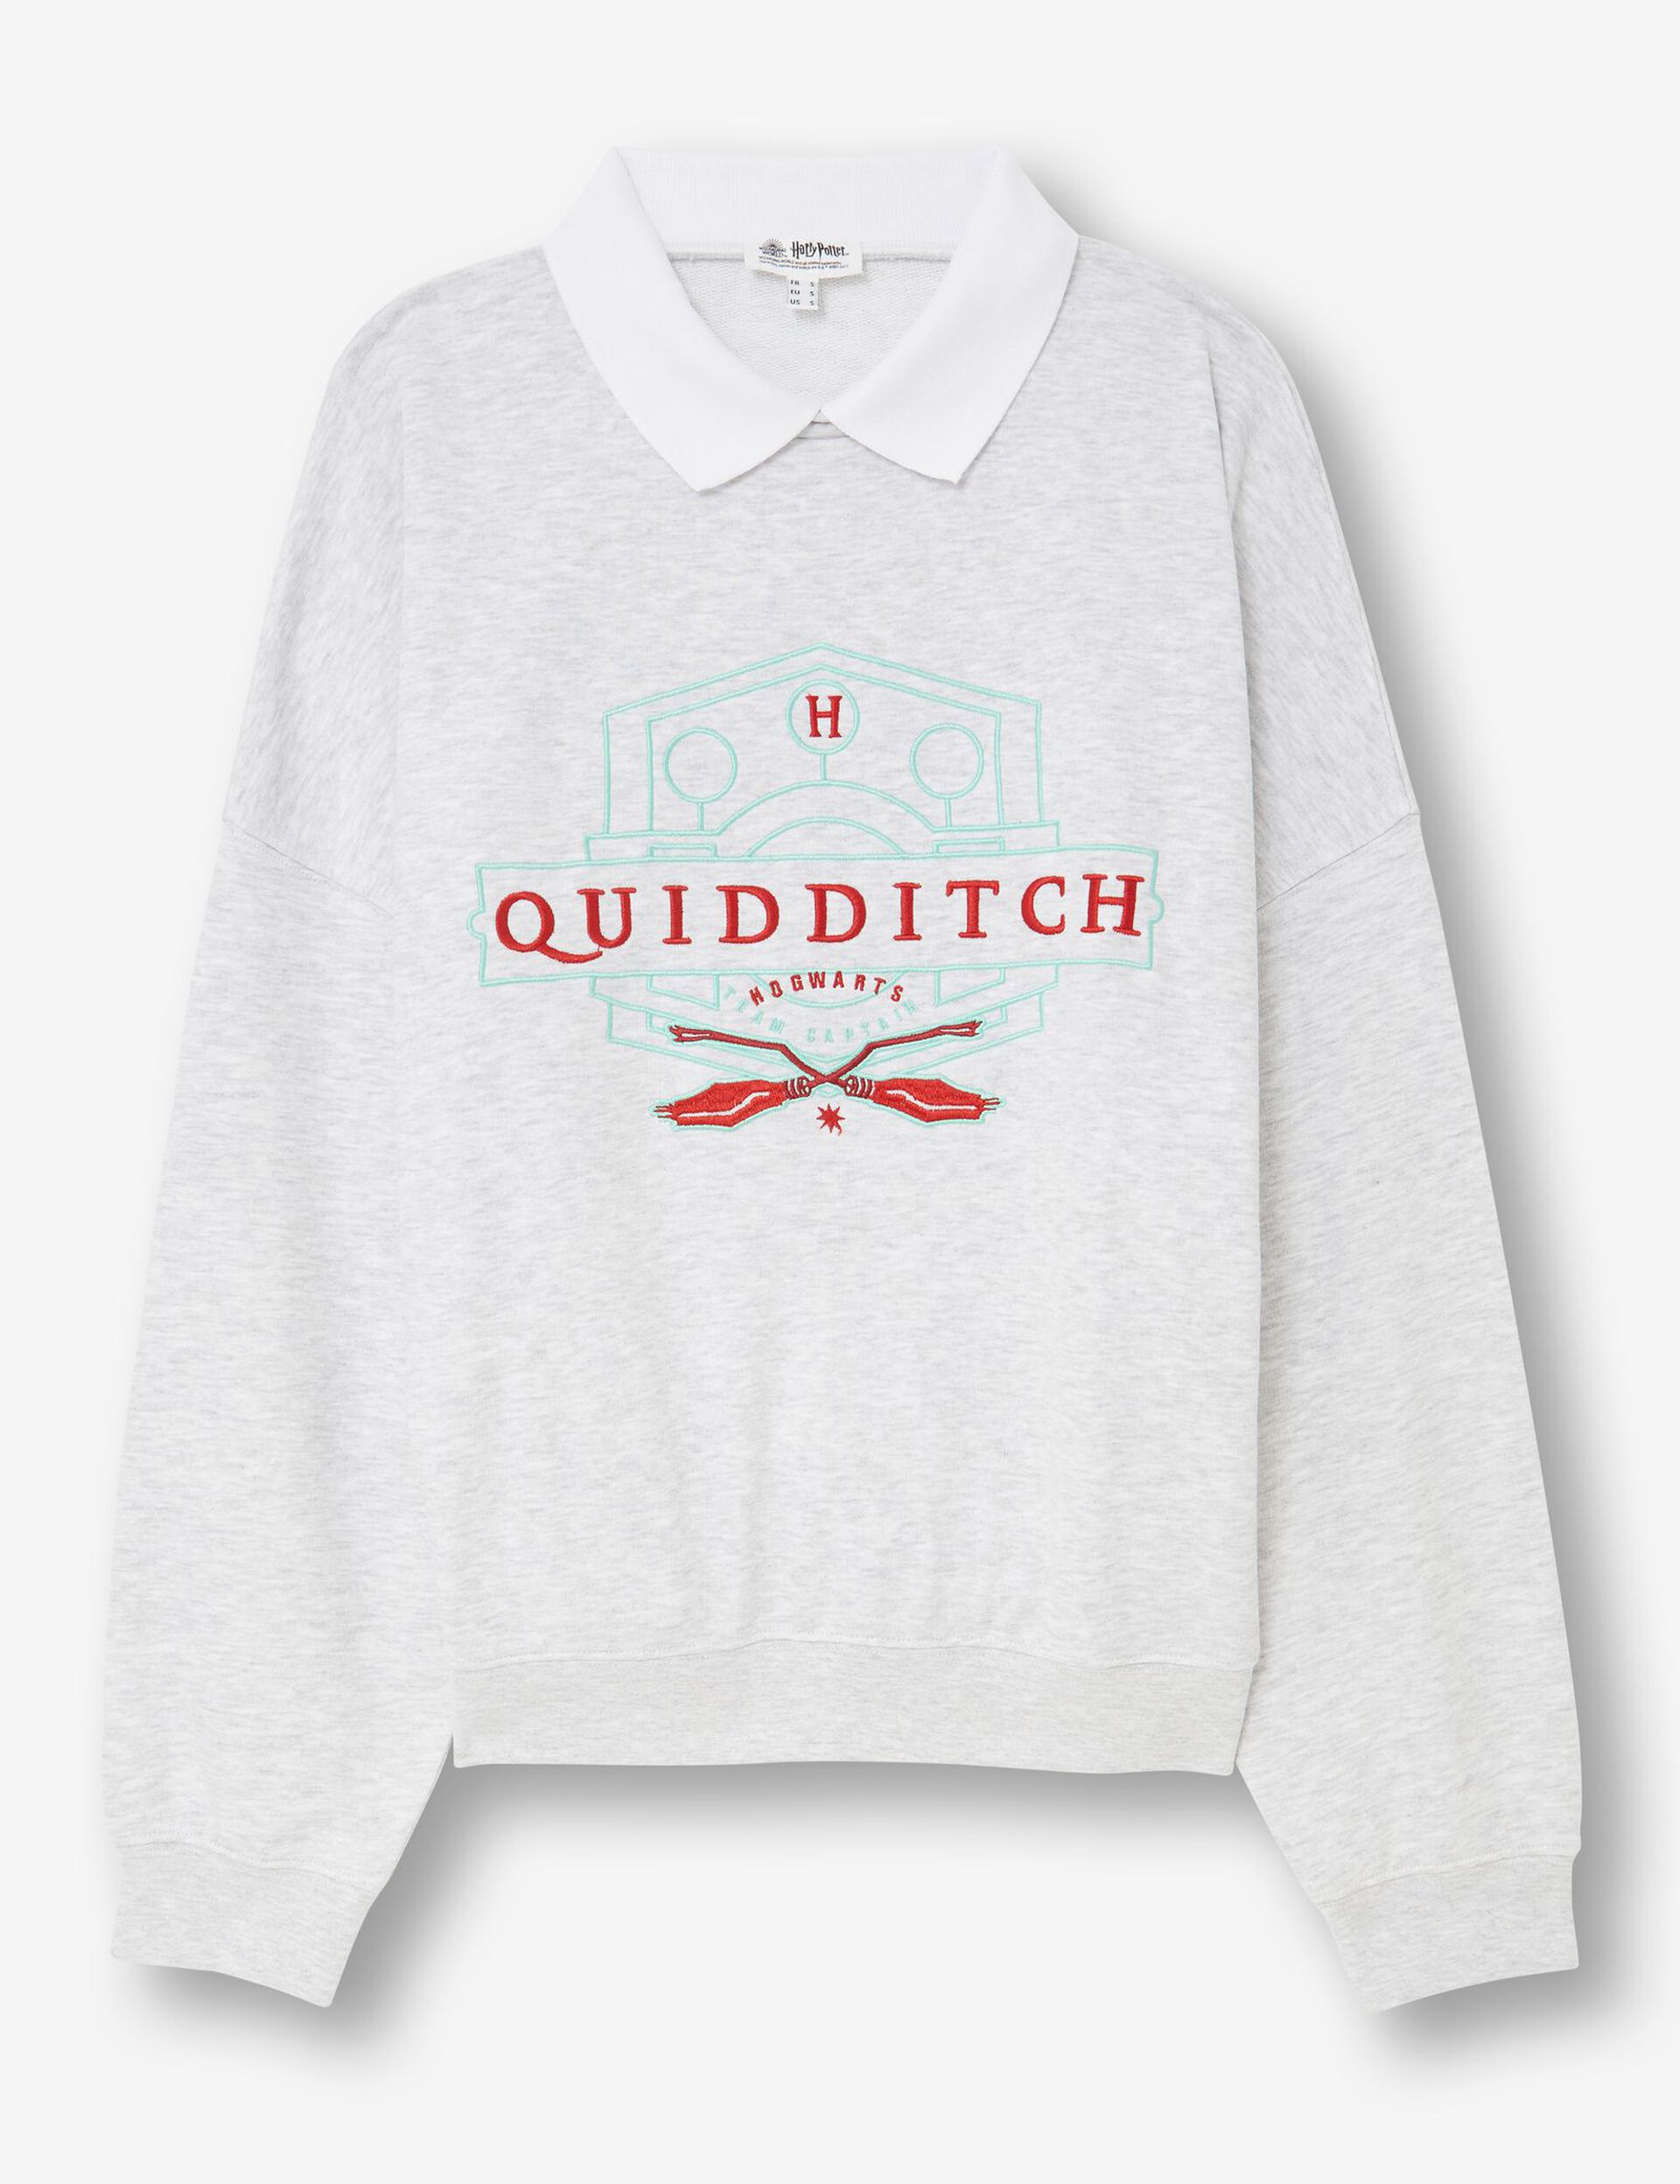 Harry Potter Quidditch sweatshirt